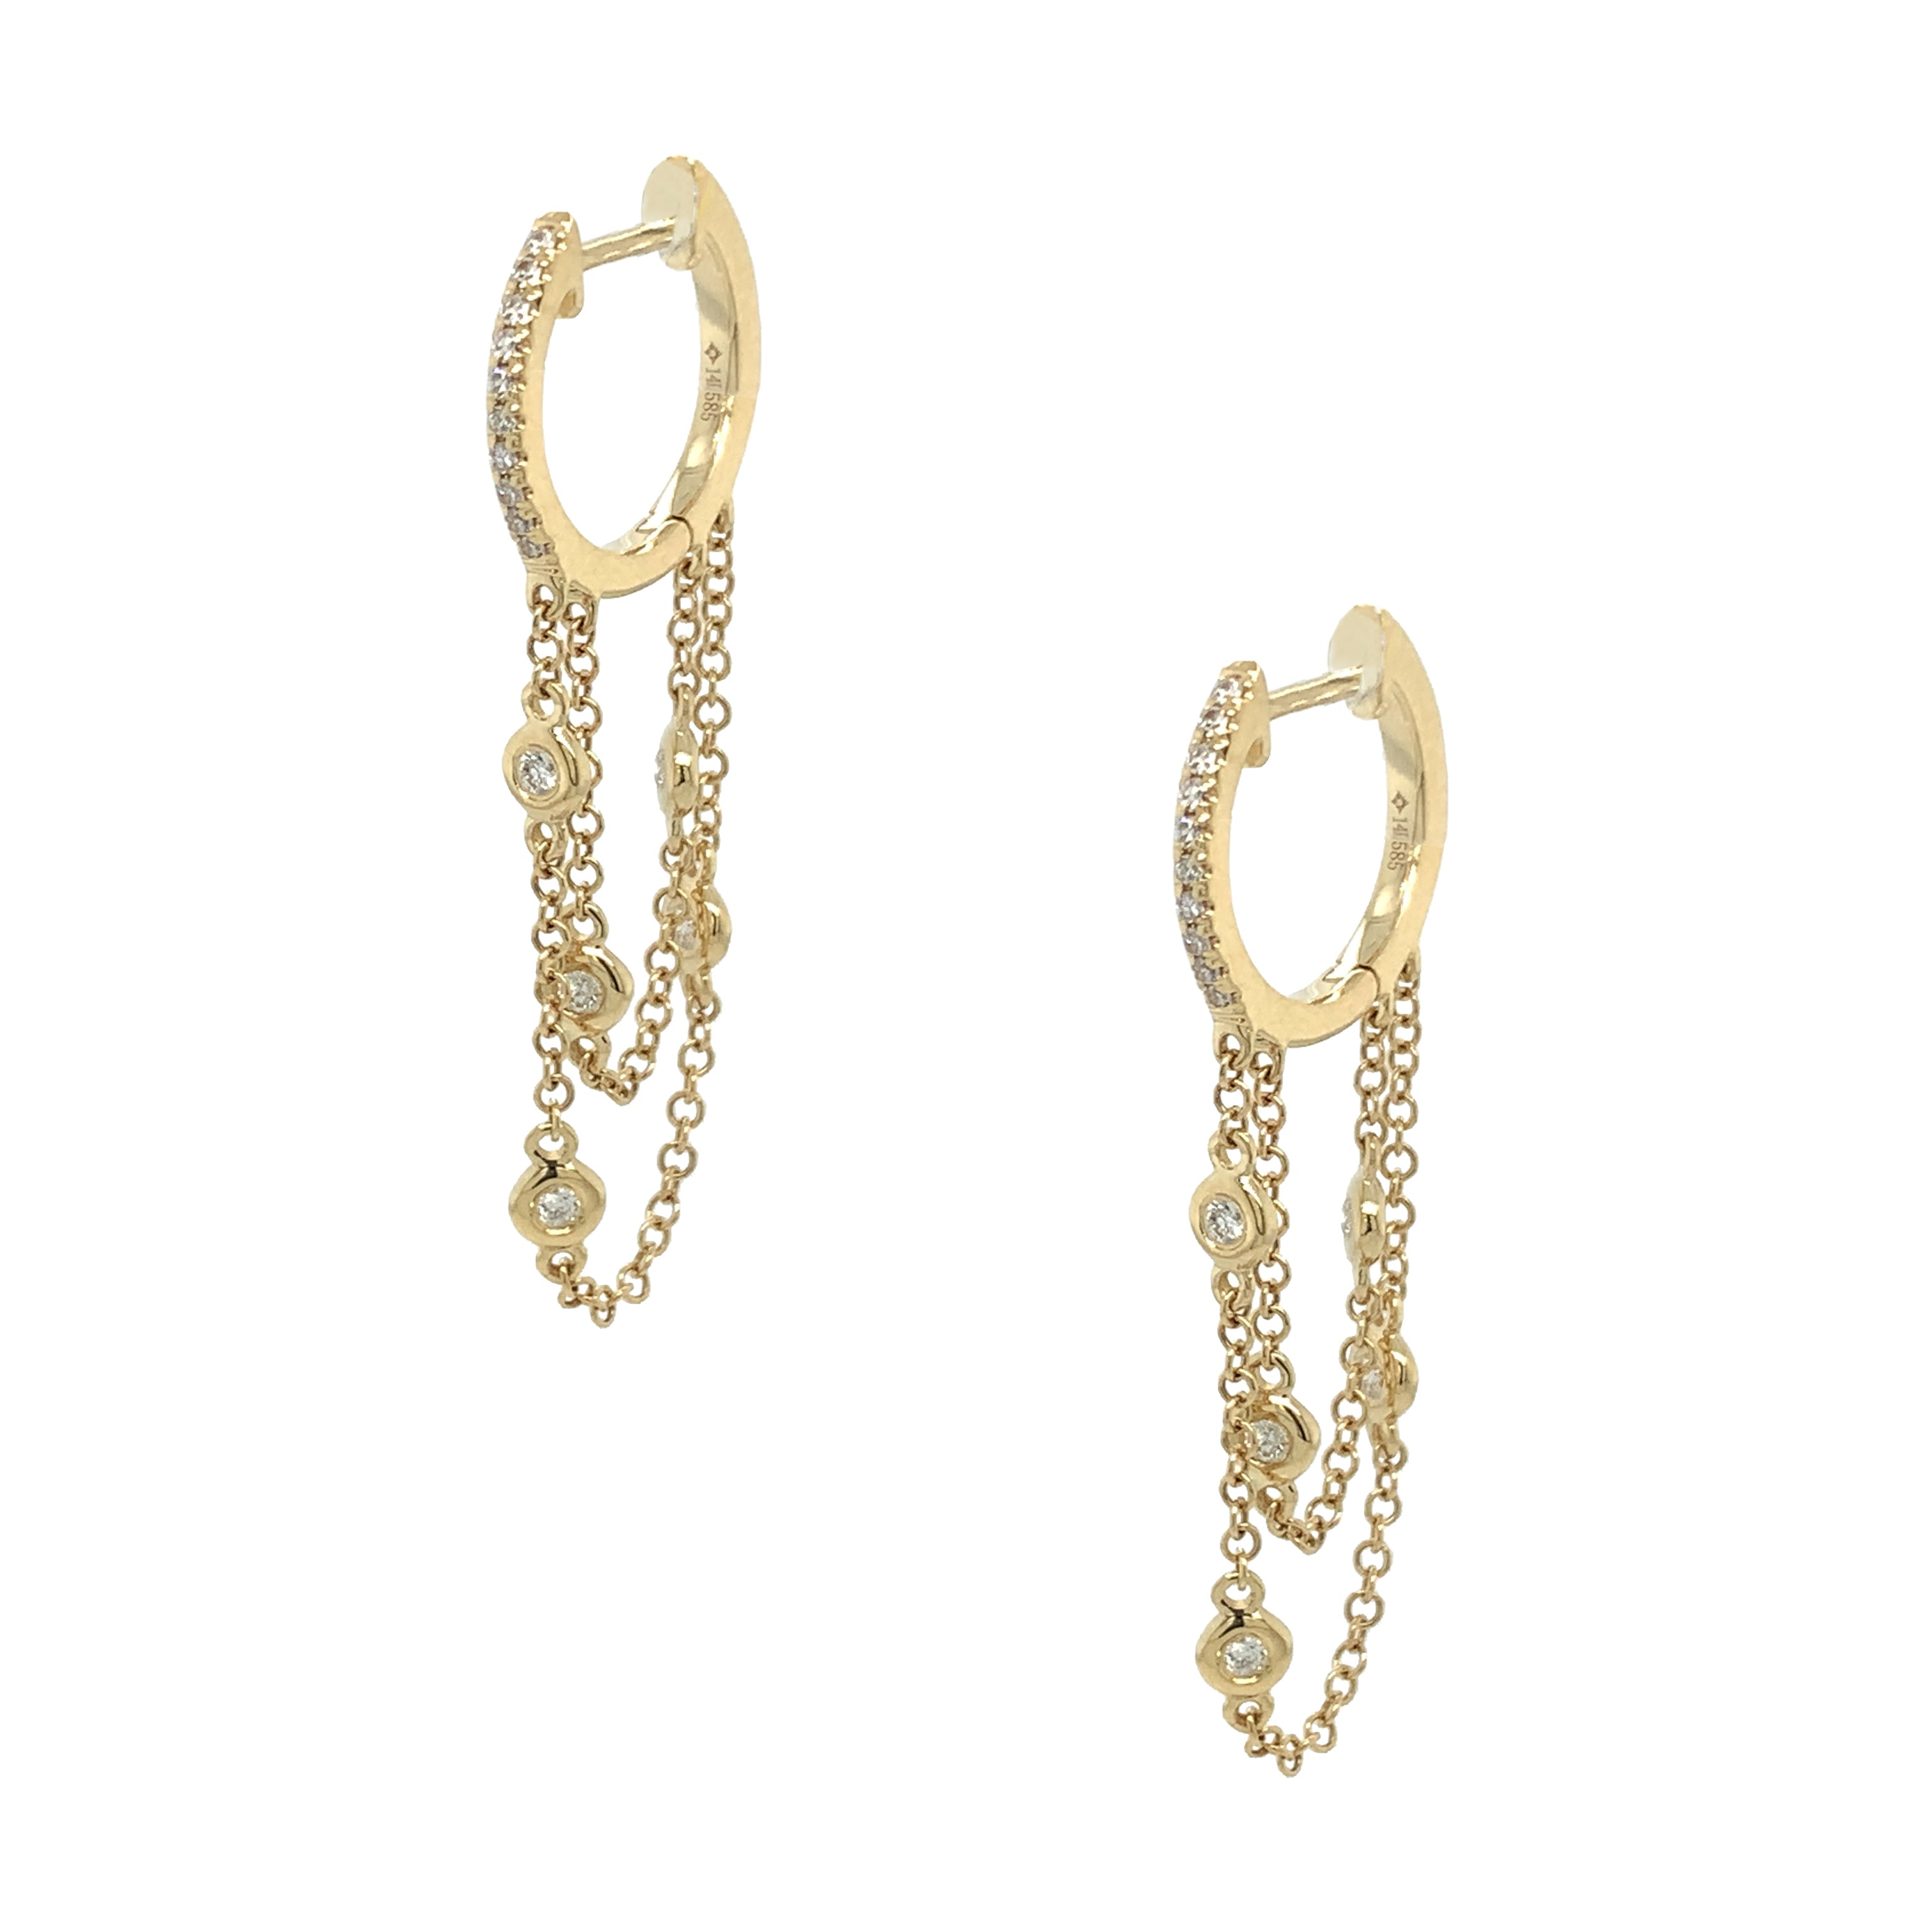 Chain Earrings 14K Yellow Gold